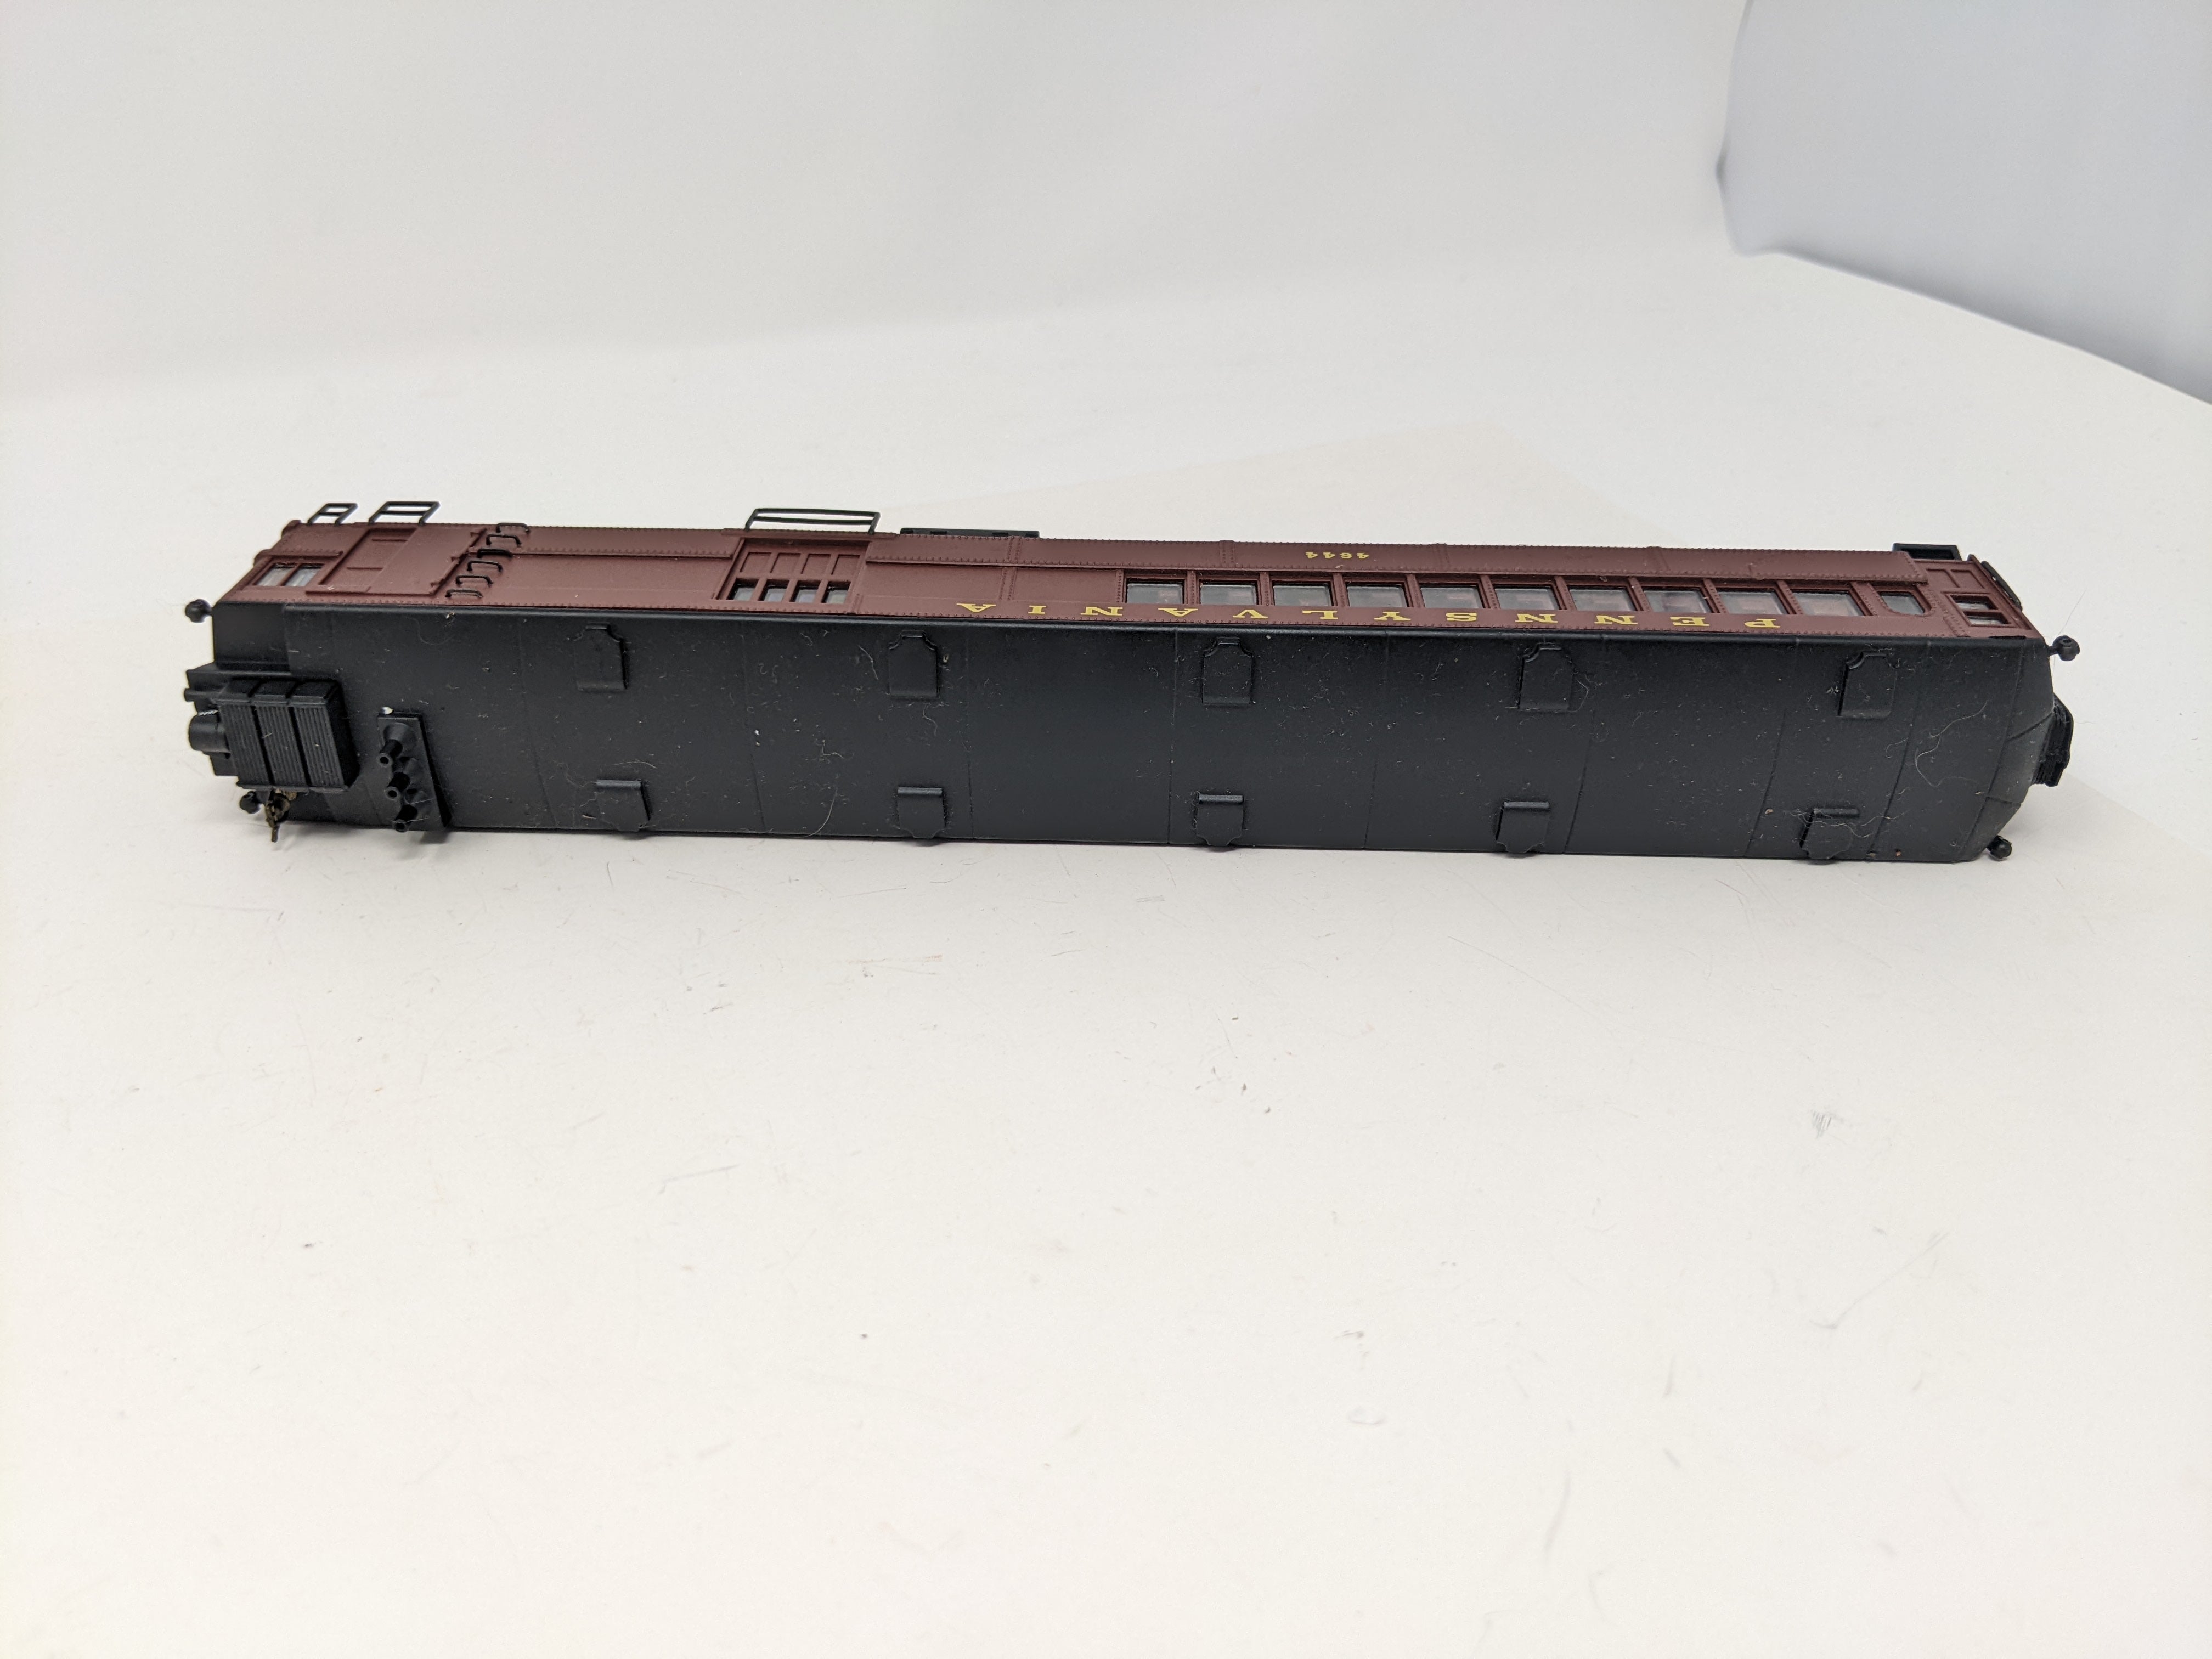 USED Bachmann HO Scale, Doodlebug Locomotive, Pennsylvania #4644